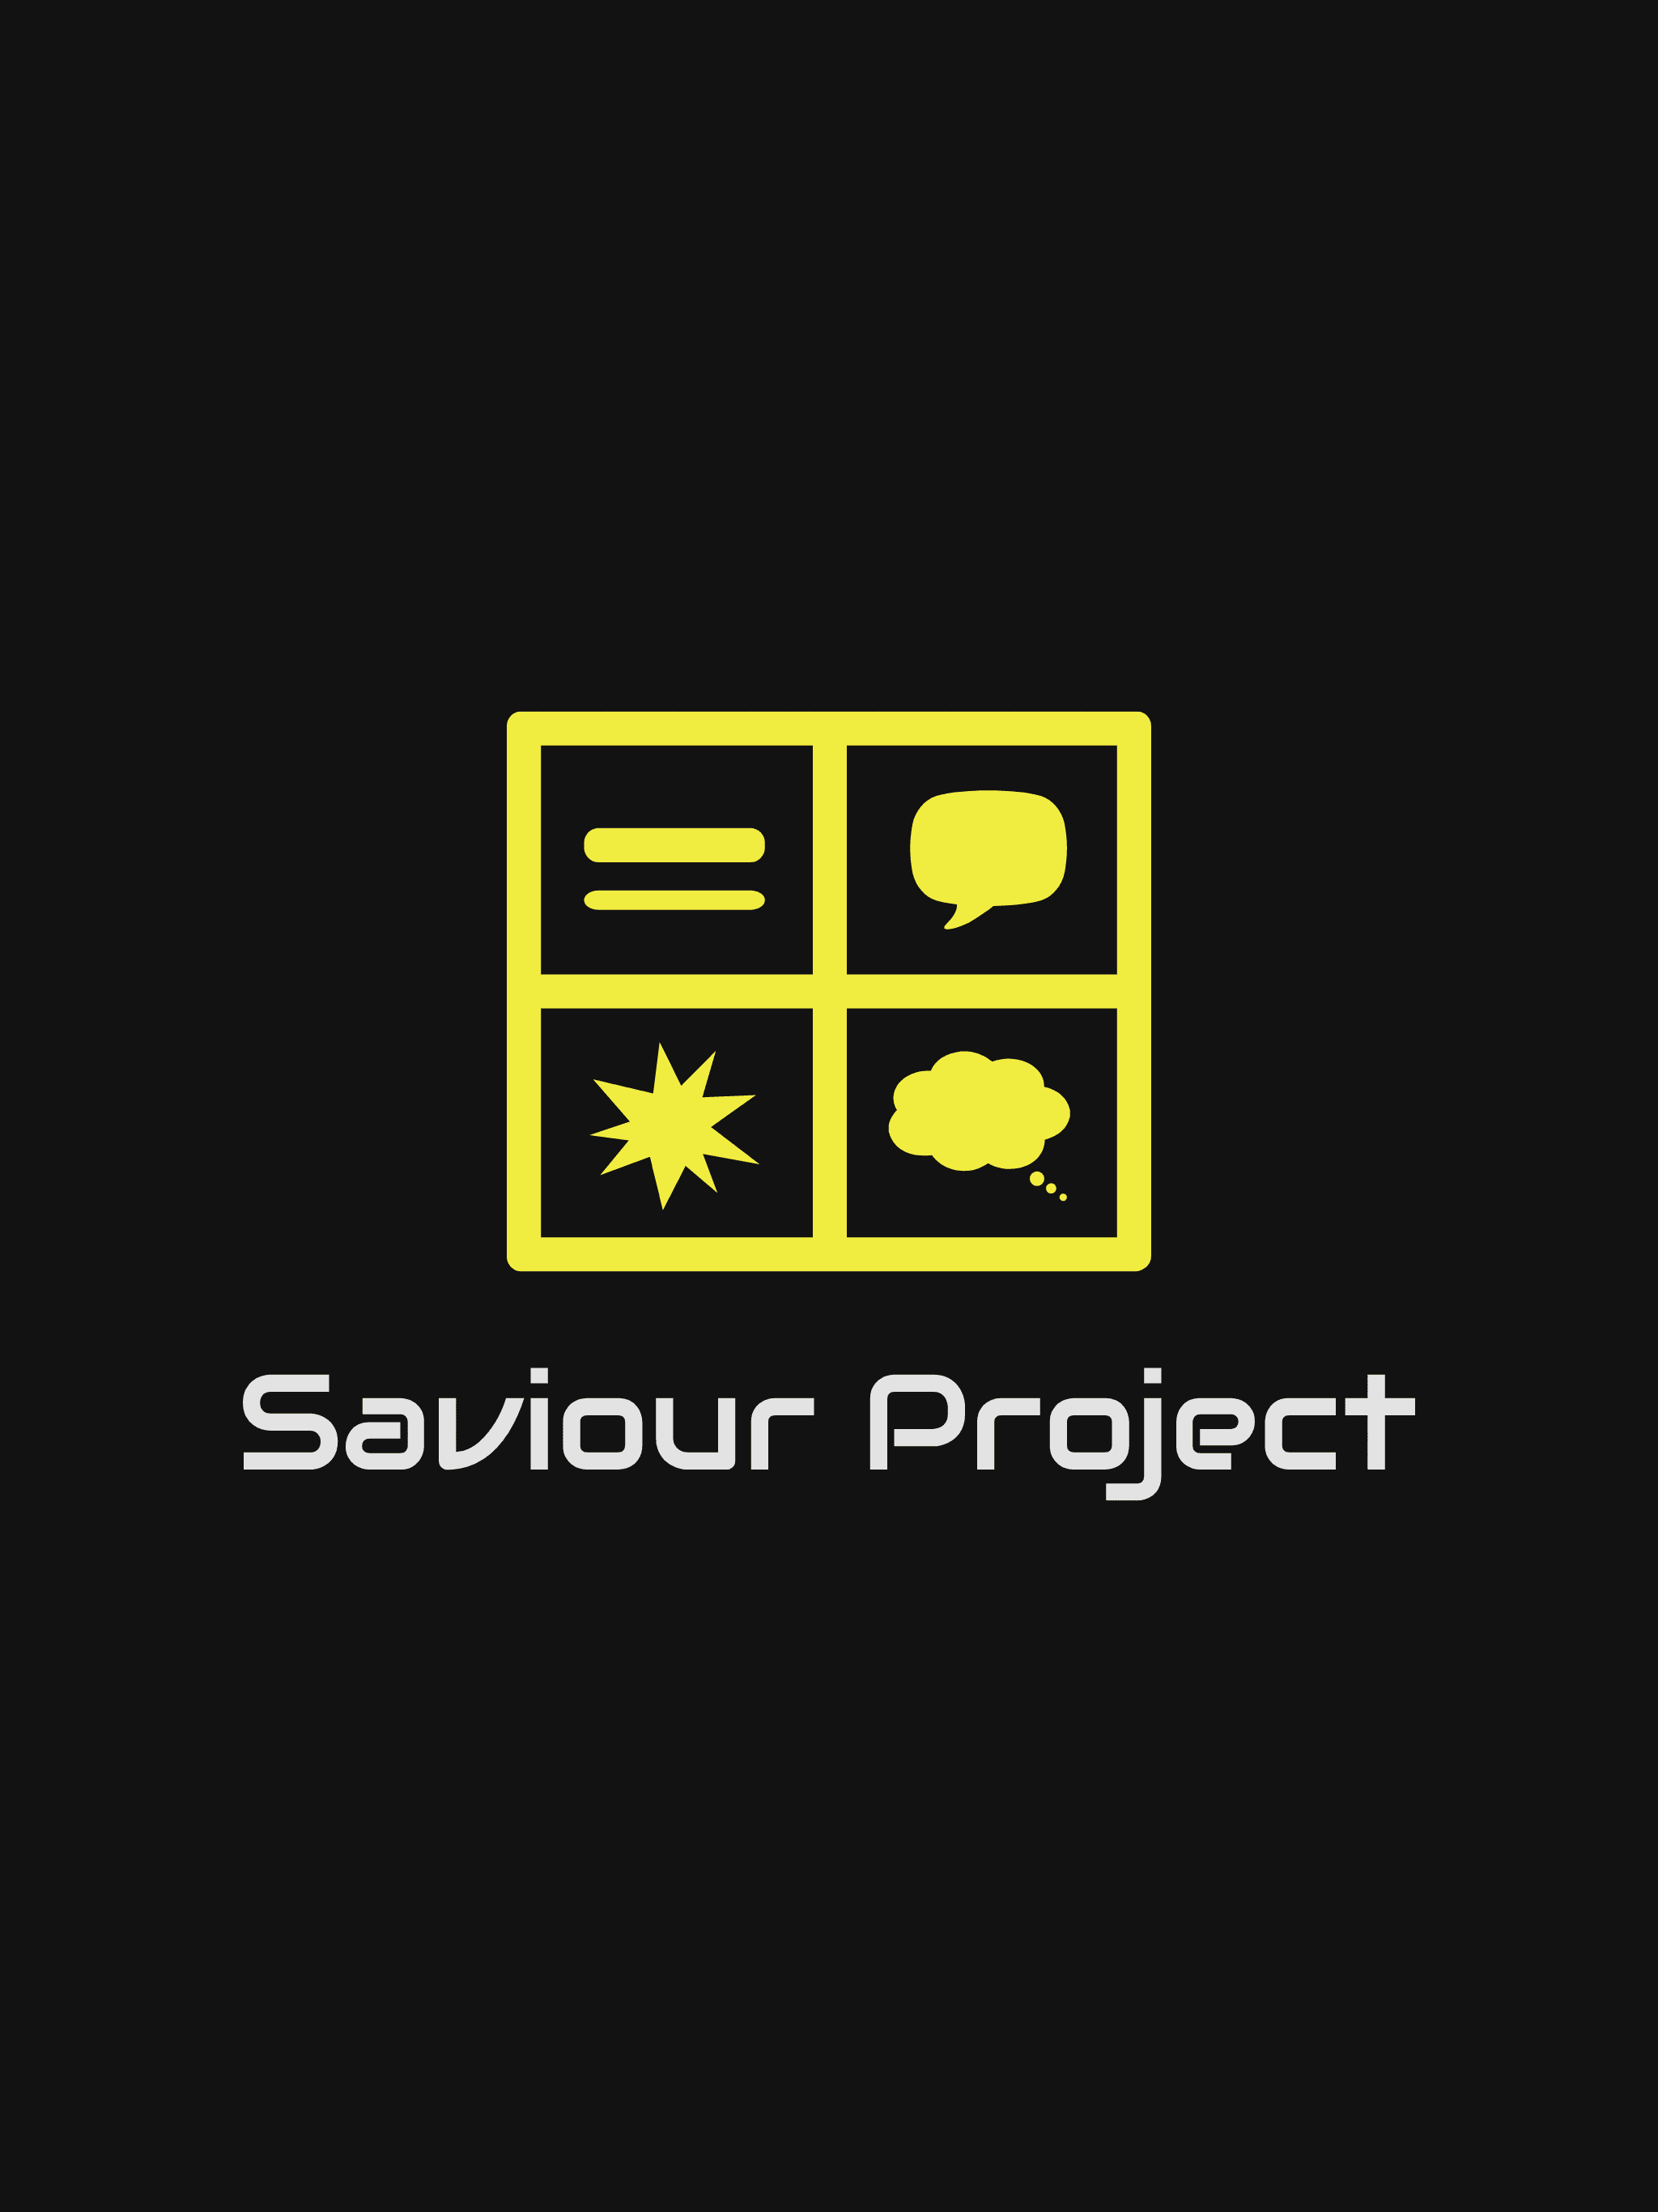 The-Saviour-Project